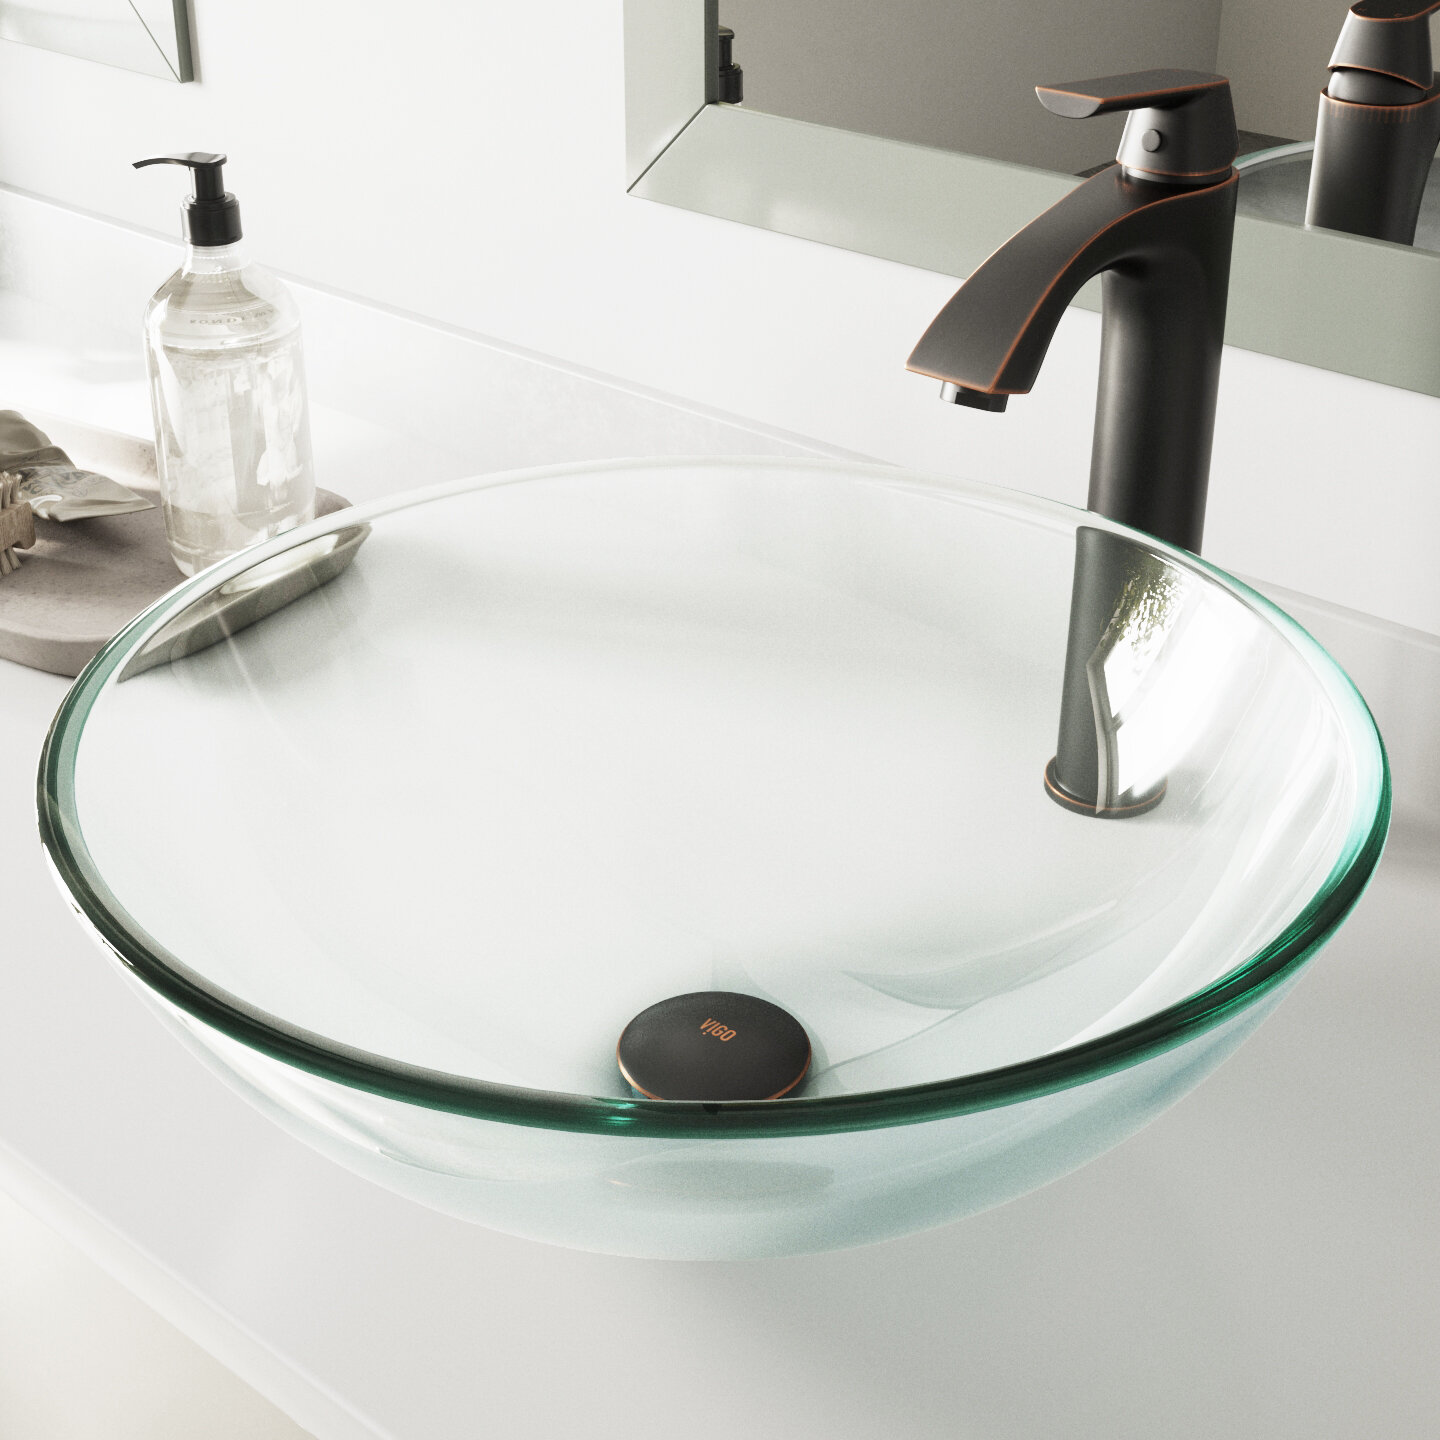 Vigo Crystalline Glass Circular Vessel Bathroom Sink With Faucet